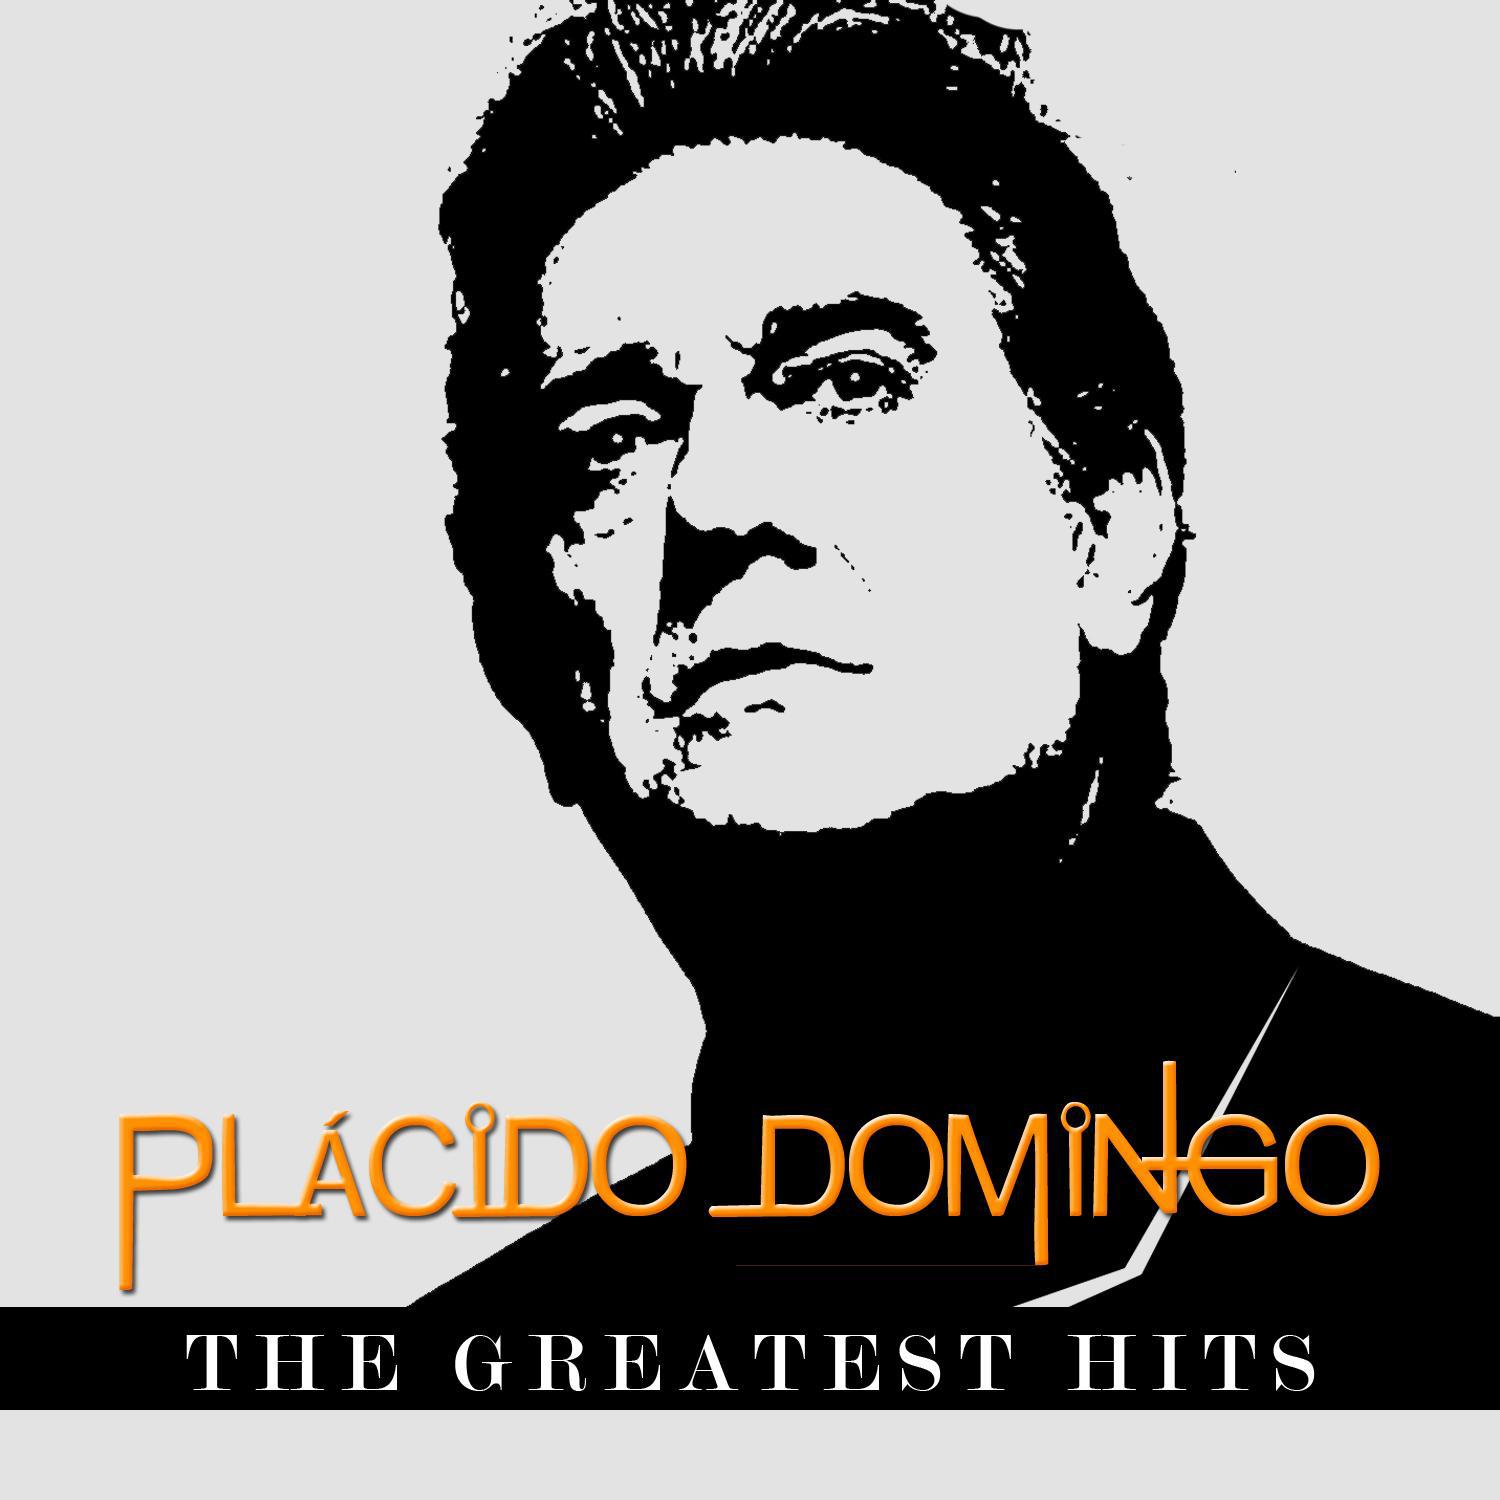 Pla cido Domingo  The Greatest Hits